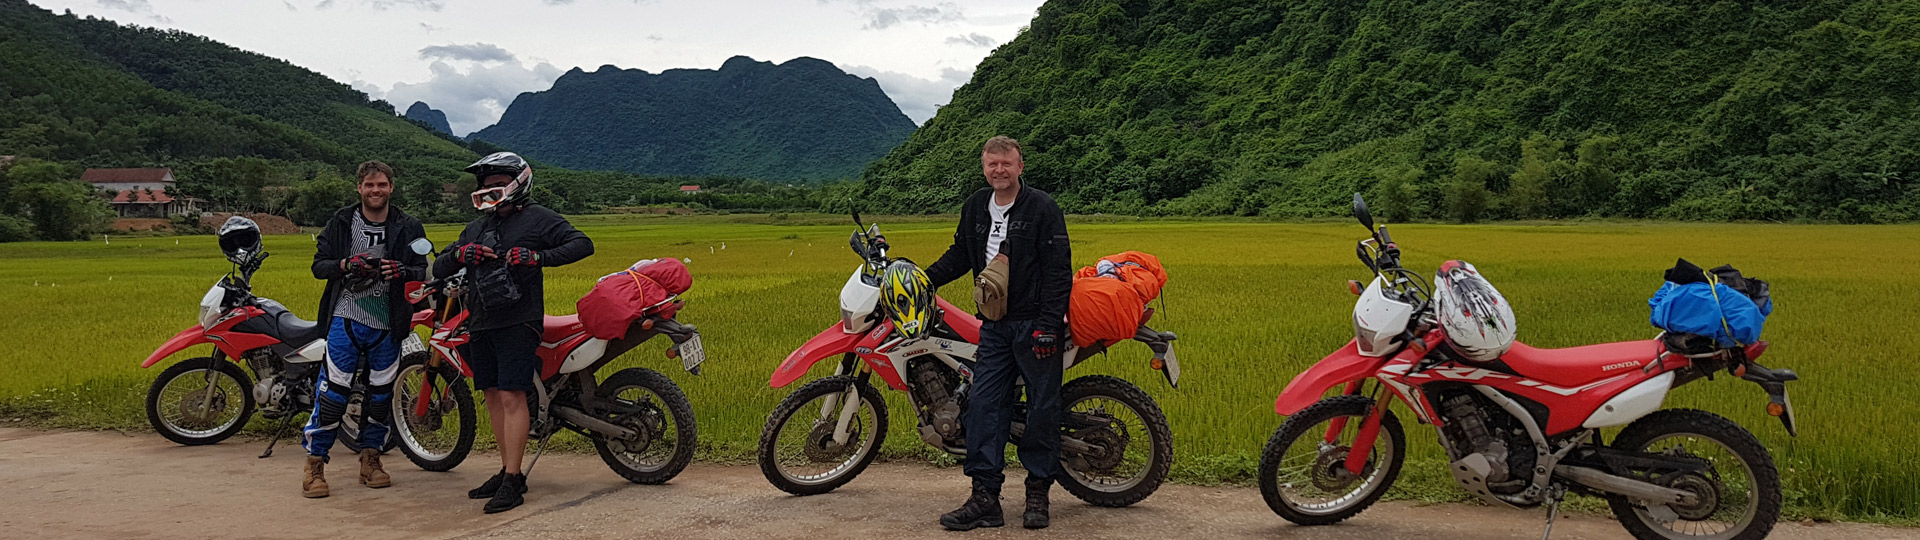 Vietnam Motorcycle Tours 2